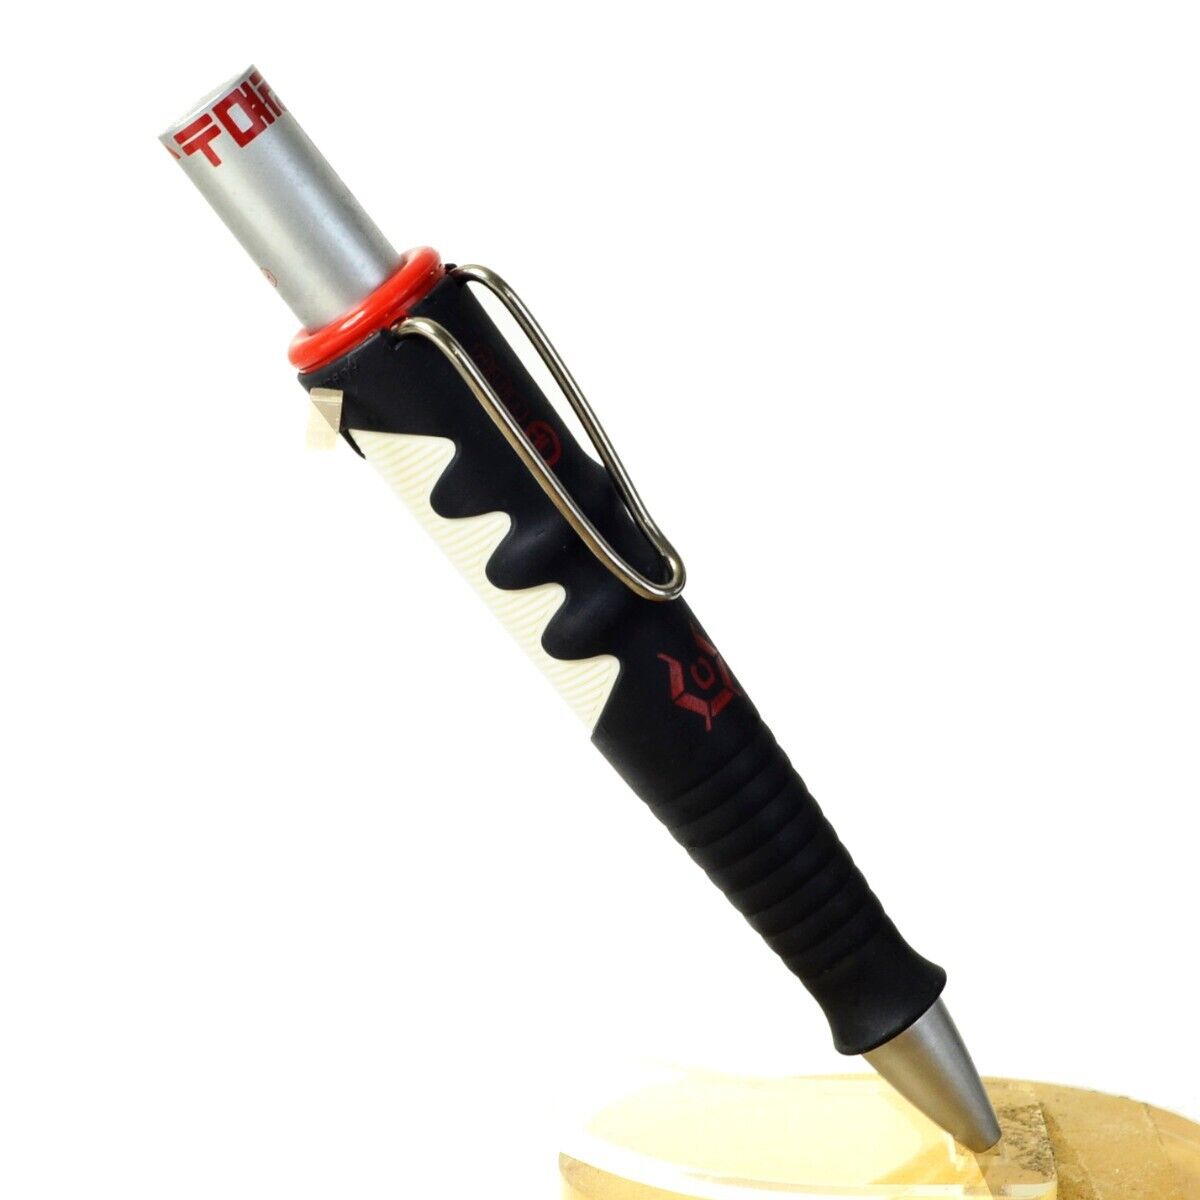 Rotring Core black and white barrel ballpoint pen - Almost unused